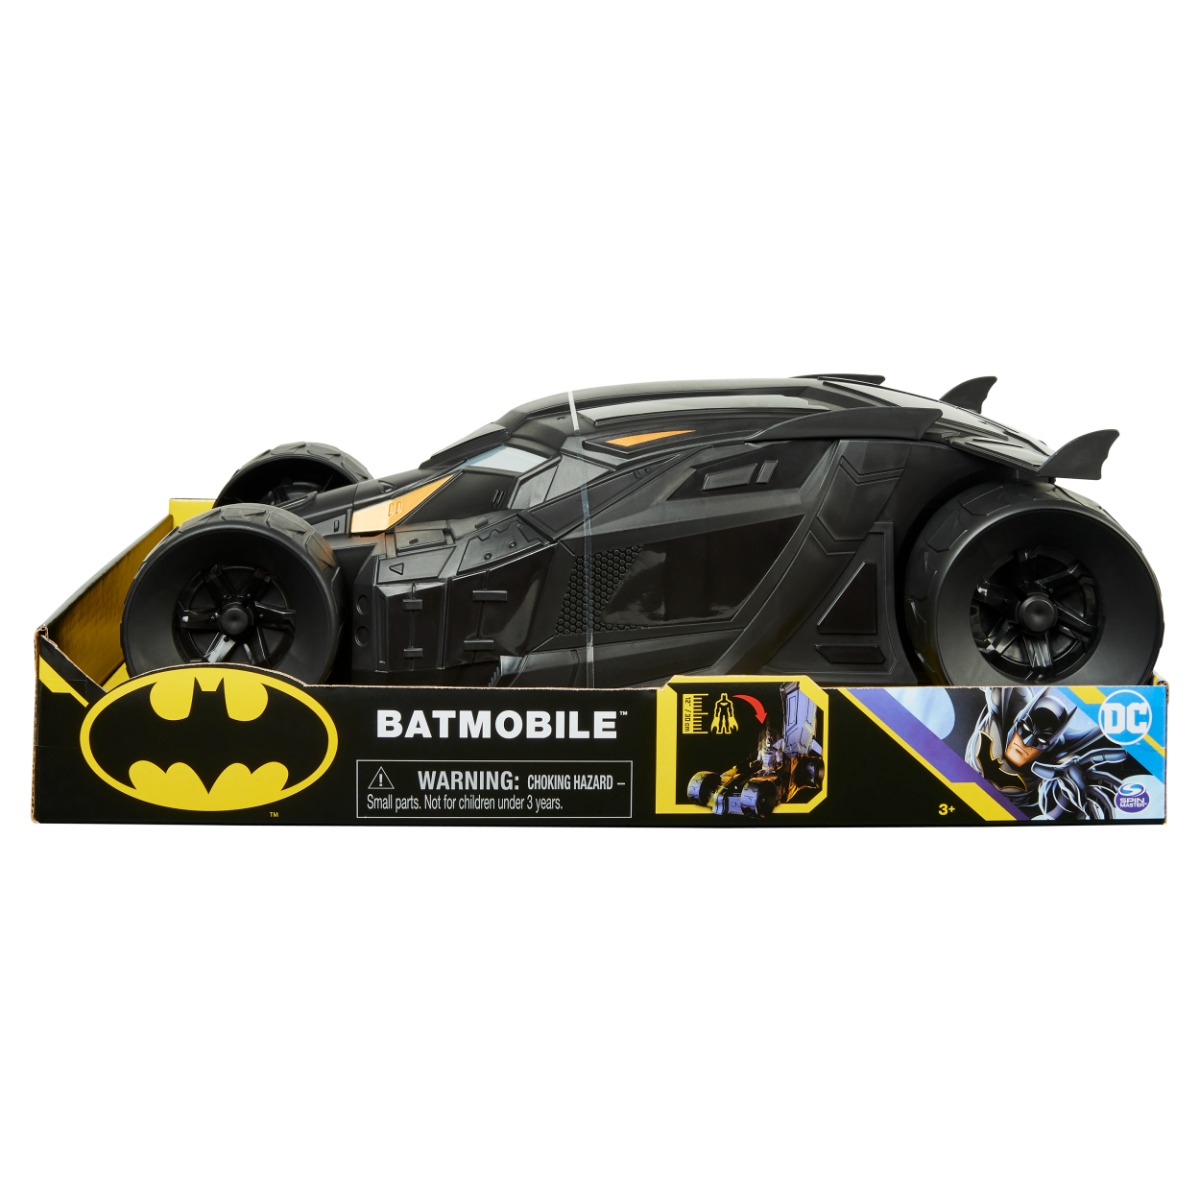 Masina lui Batman, DC Universe, Batmobile